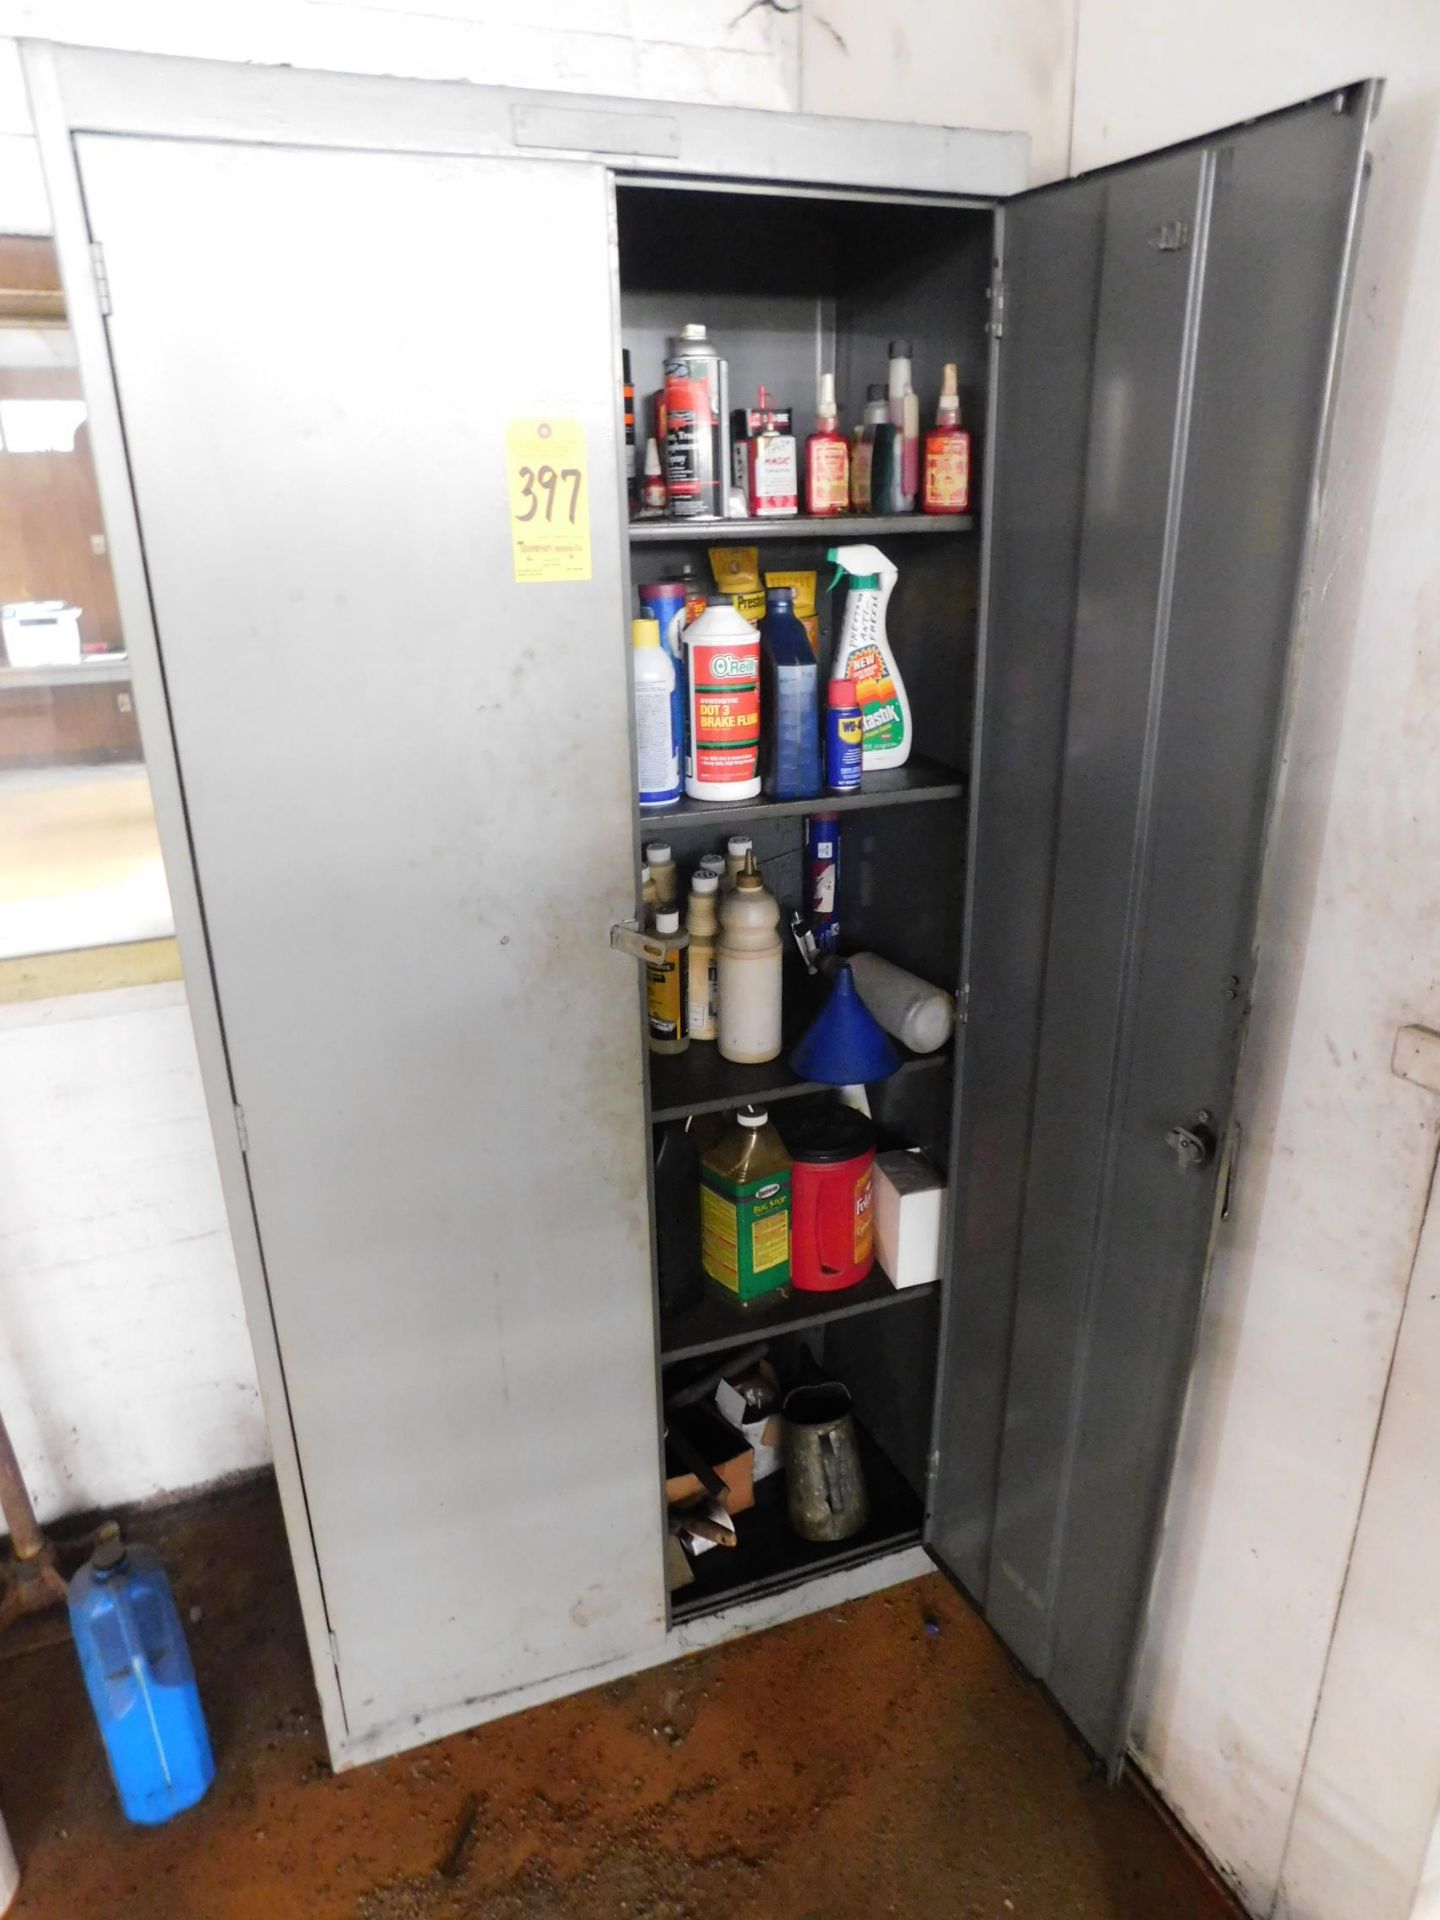 2-Door Upright Storage Cabinet with Contents